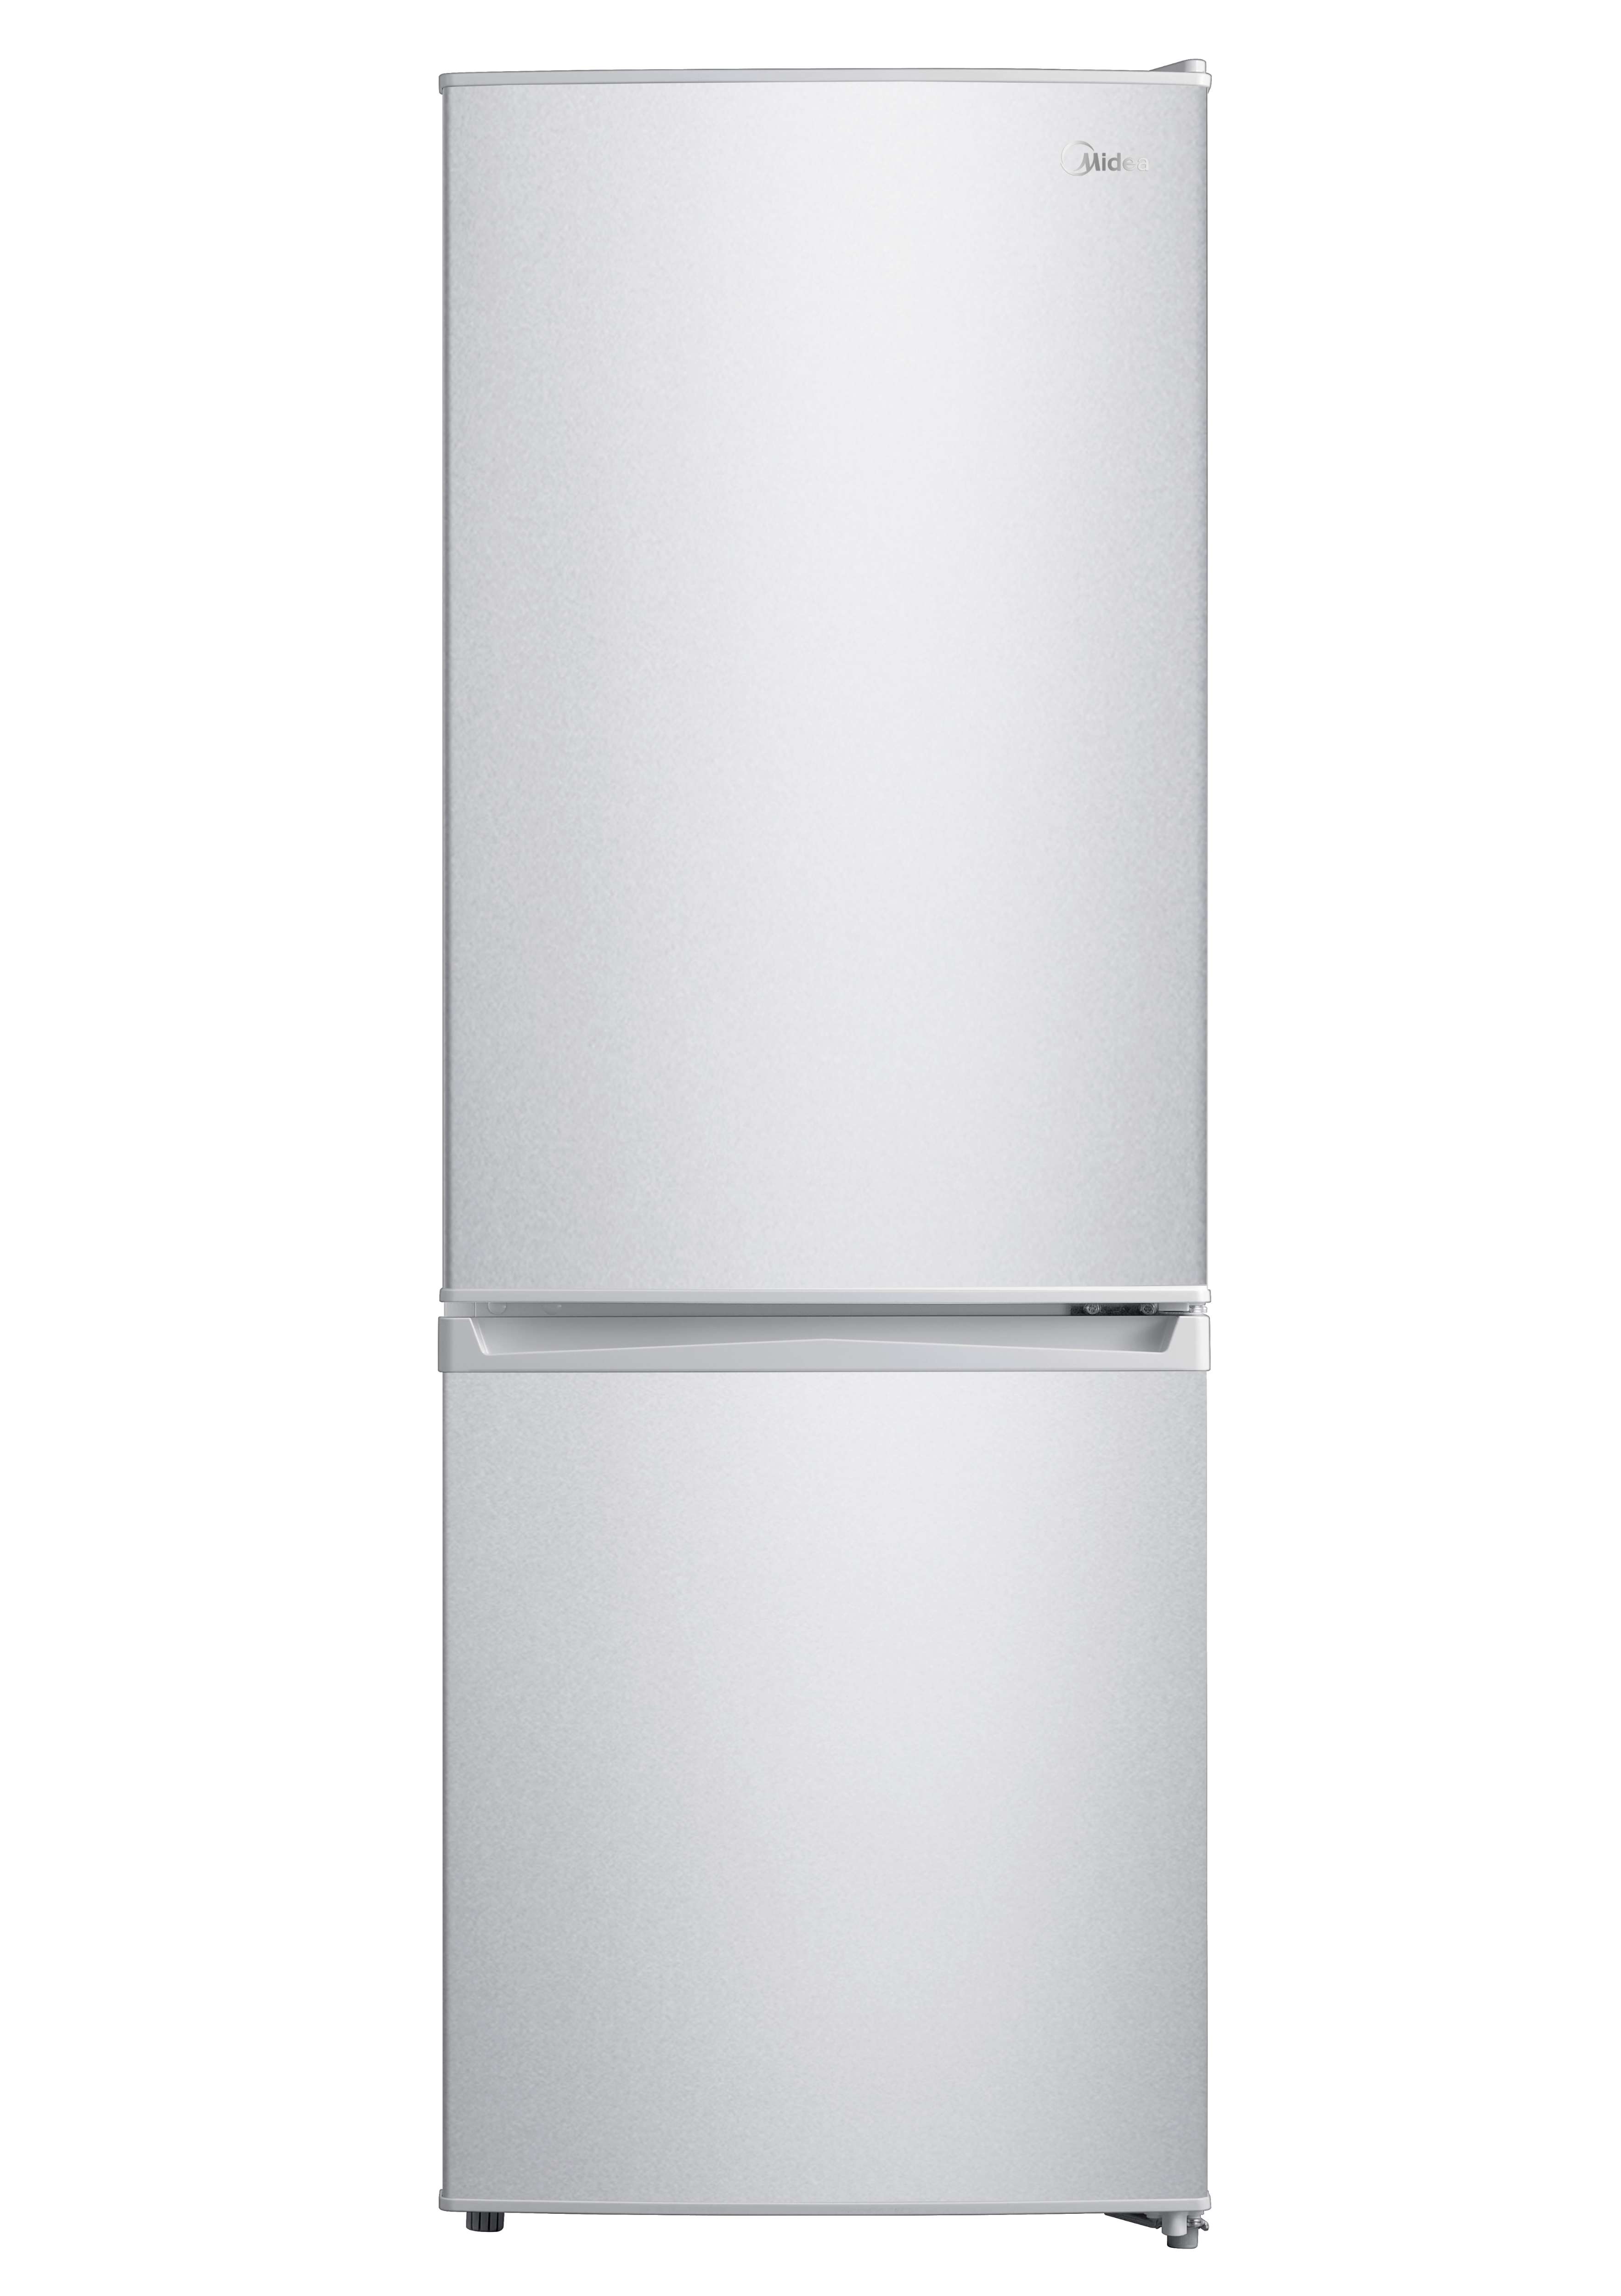 Consumir hecho Visión Refrigerador Frío Directo Bottom Freezer 167 lts MRFI-1700S234RN